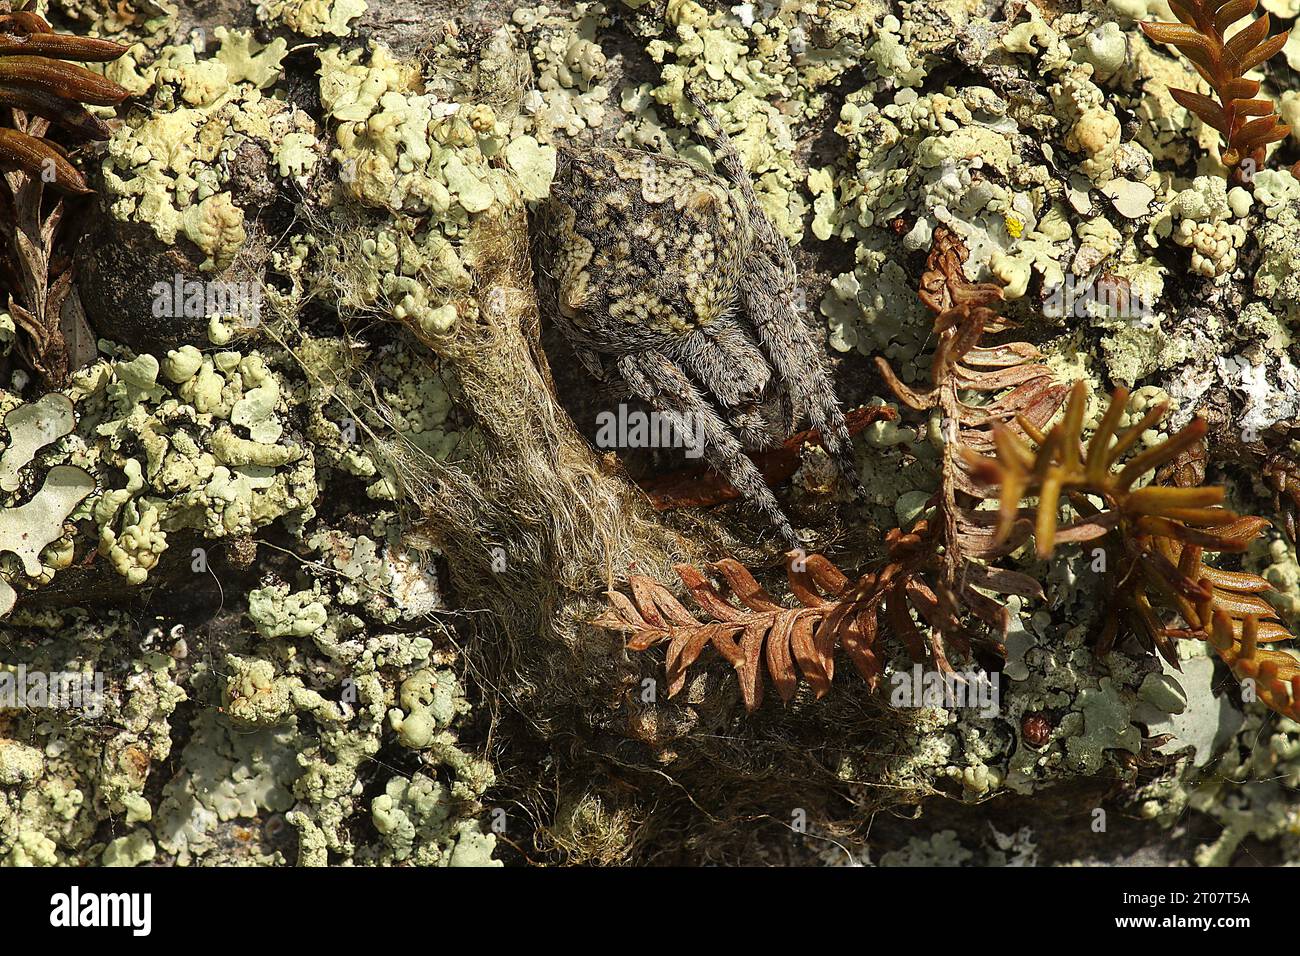 Knobbled orbweb spiders (Socca sp.) amidst lichens on nikau palm trunk Stock Photo